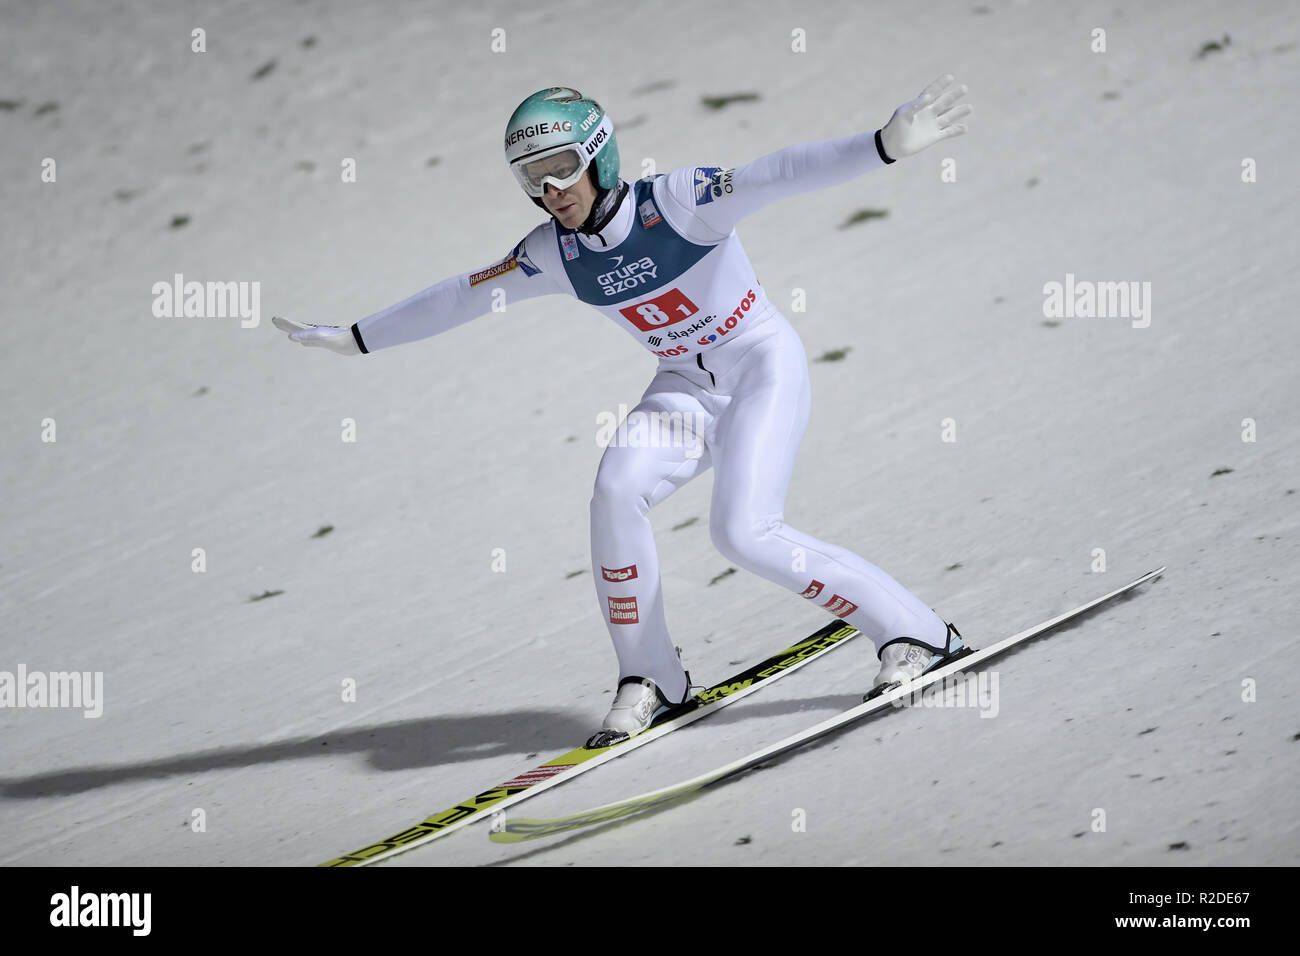 Michael Haybock  World Cup FIS Ski Jumping on November 17, 2018 in Wisla, Poland. Stock Photo